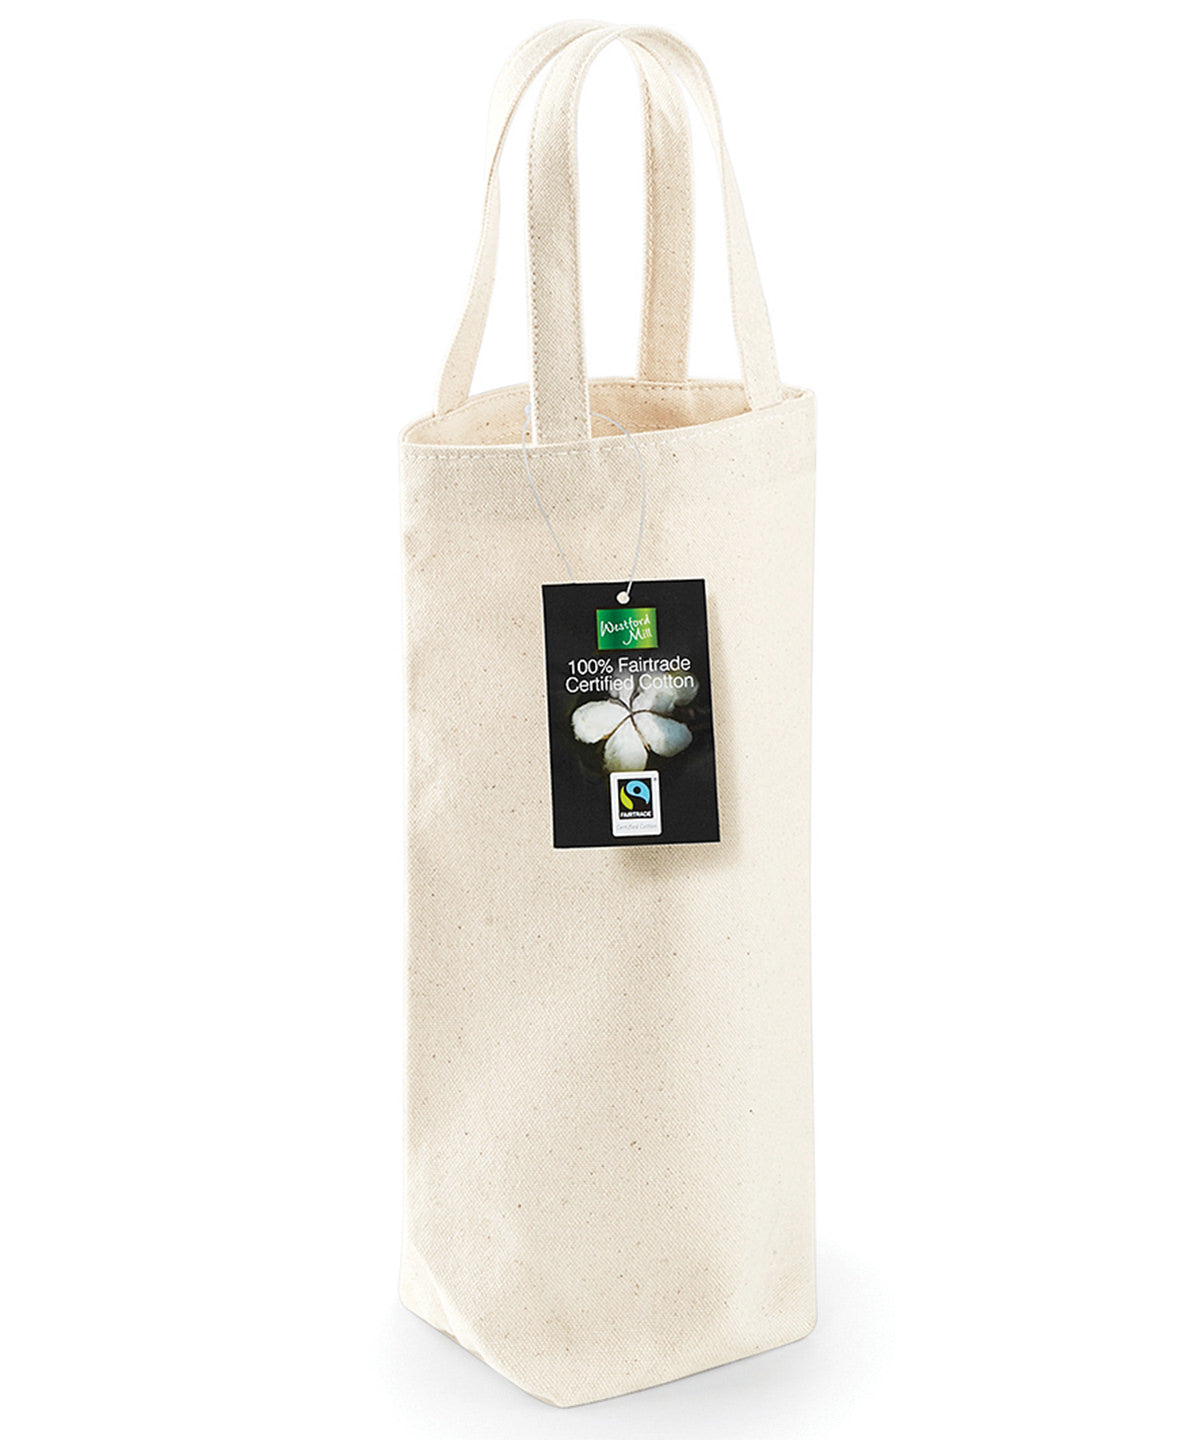 Töskur - Fairtrade Cotton Bottle Bag